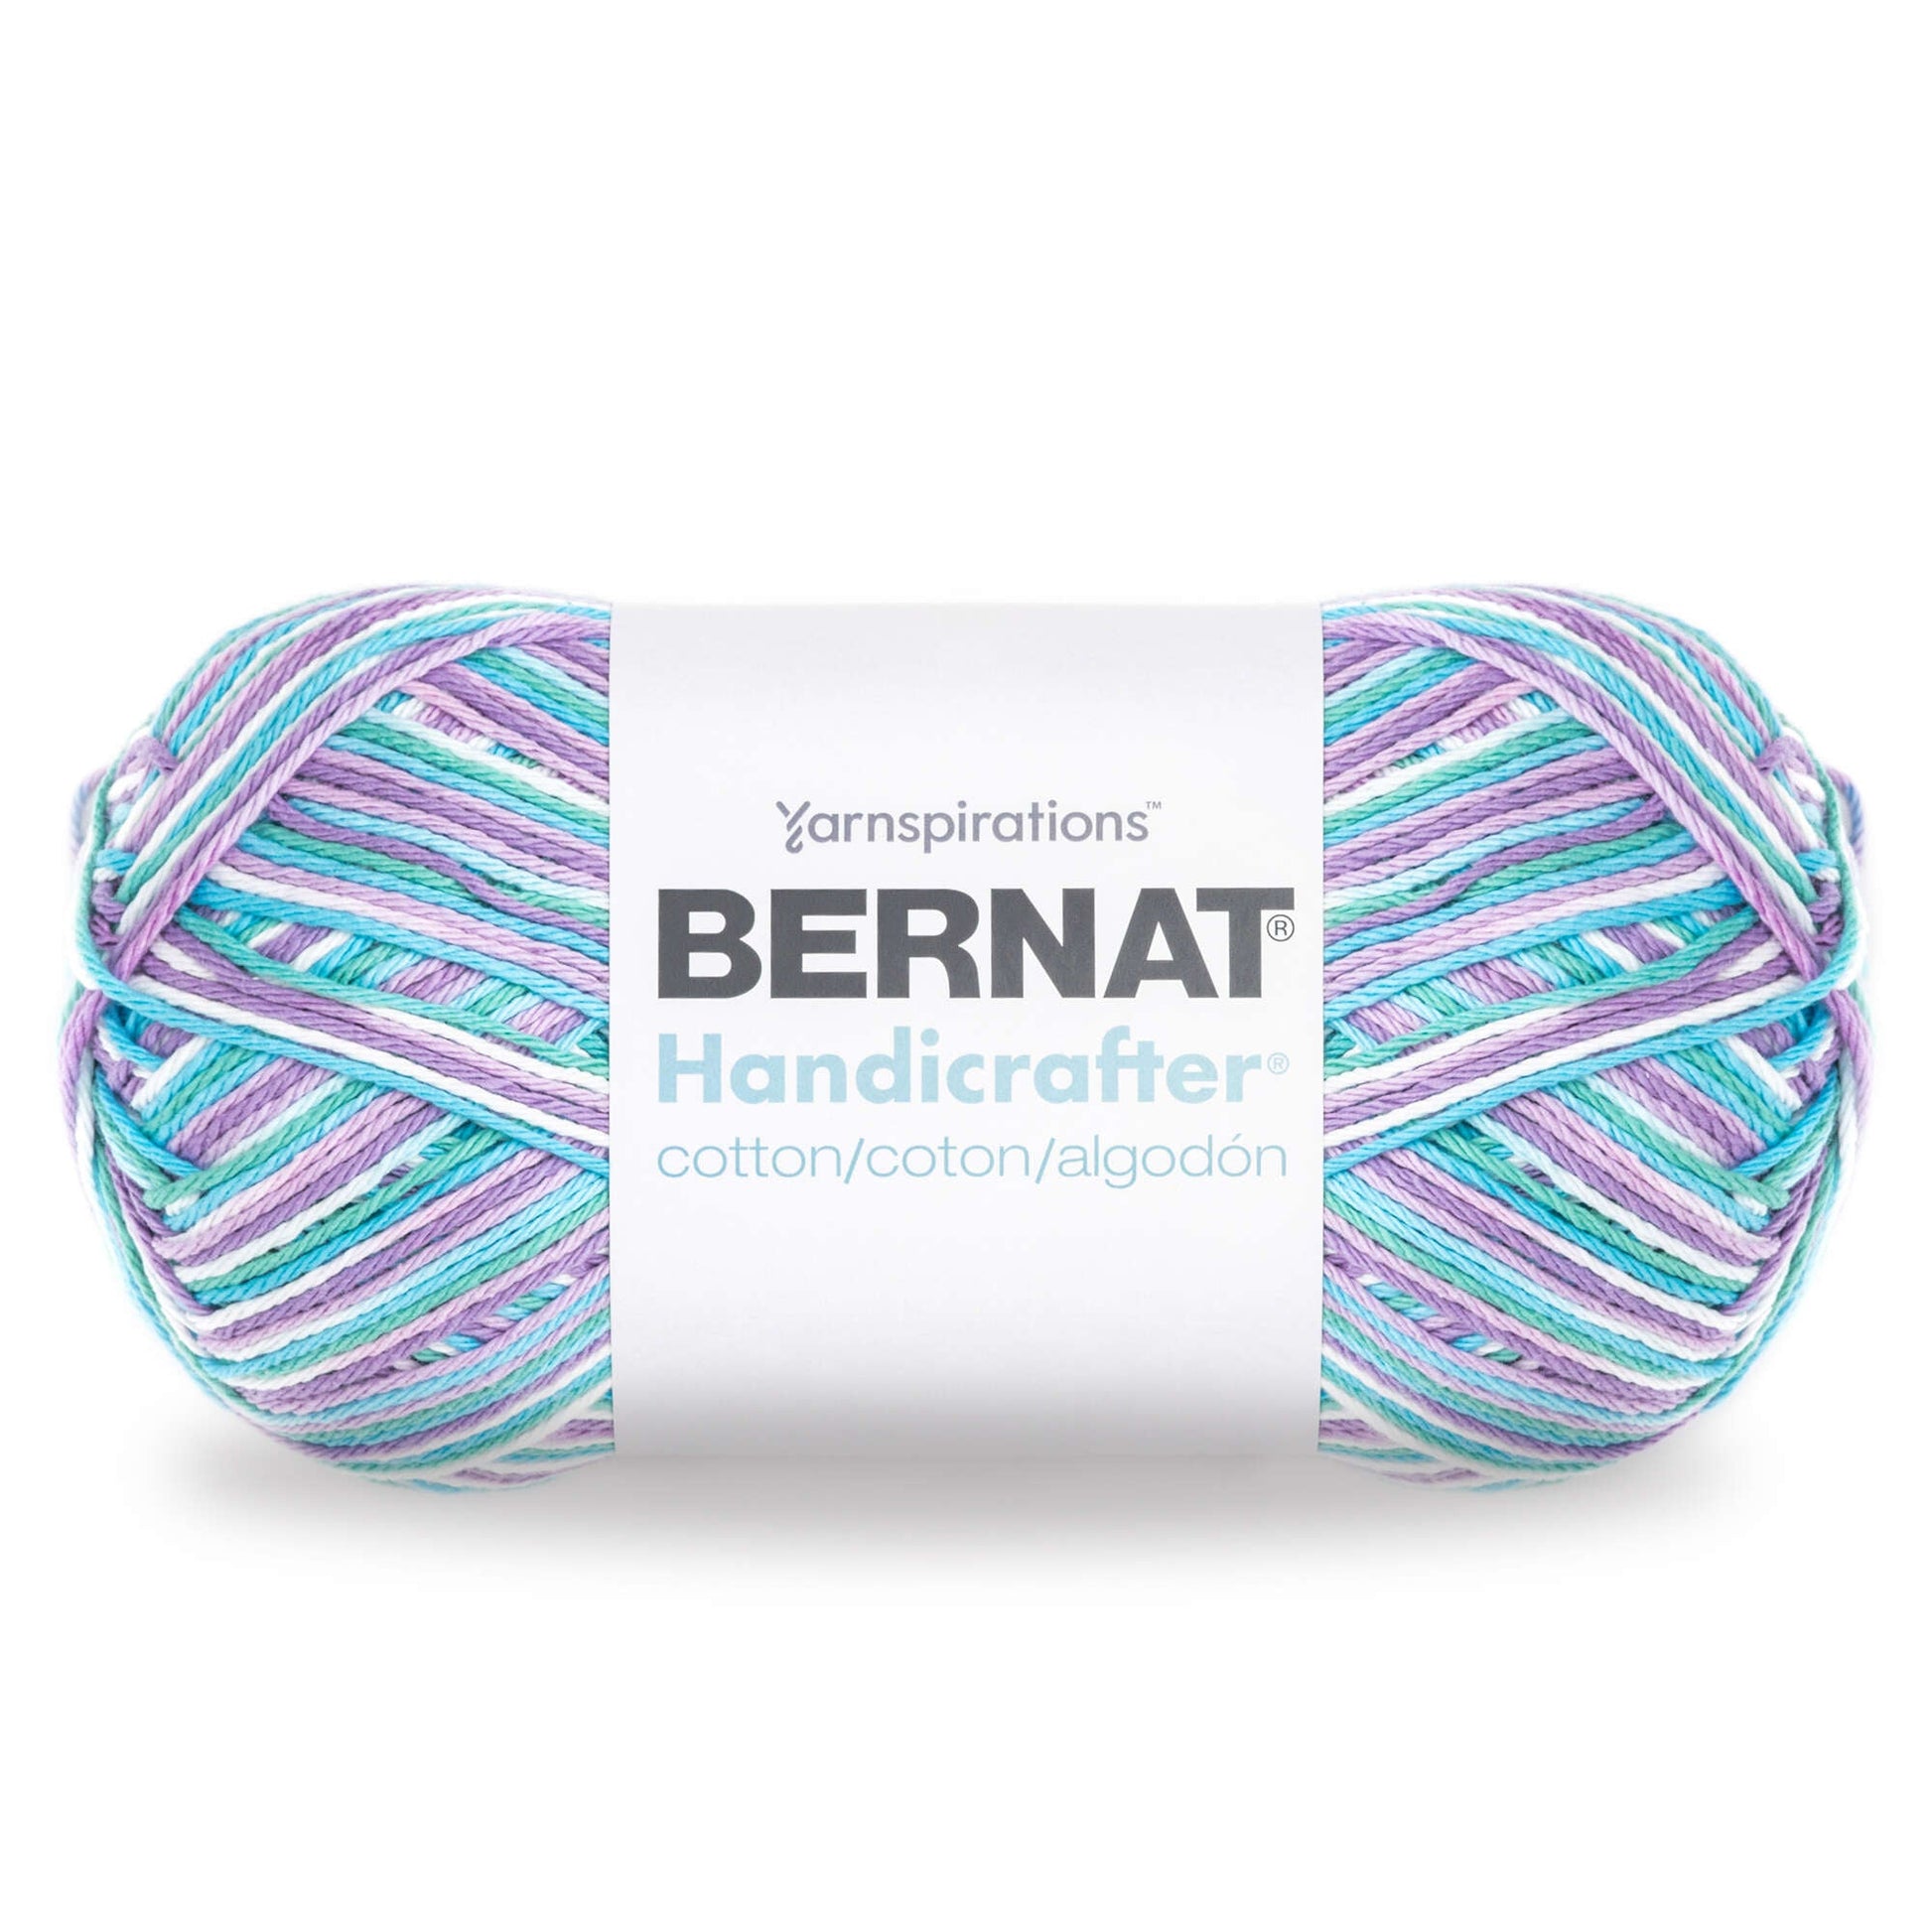 Bernat Handicrafter Cotton Ombres Yarn (340g/12oz) - Discontinued Shades